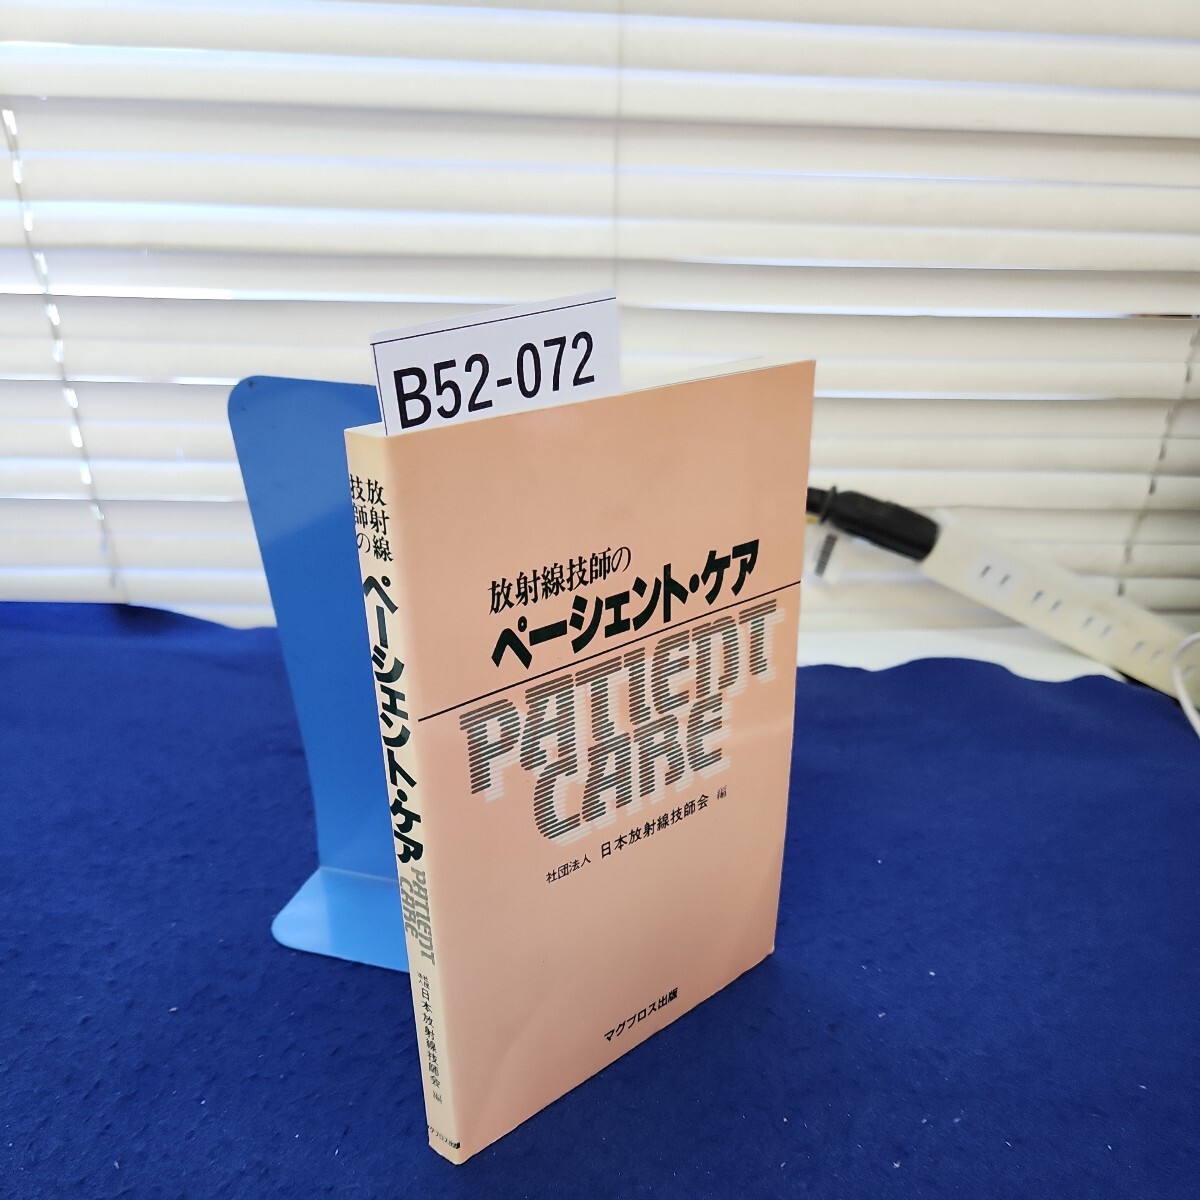 B52-072 放射線技師のペーシェント・ケア 社団法人日本放射師会編 マグブロス出版 若干の折れあり_画像1